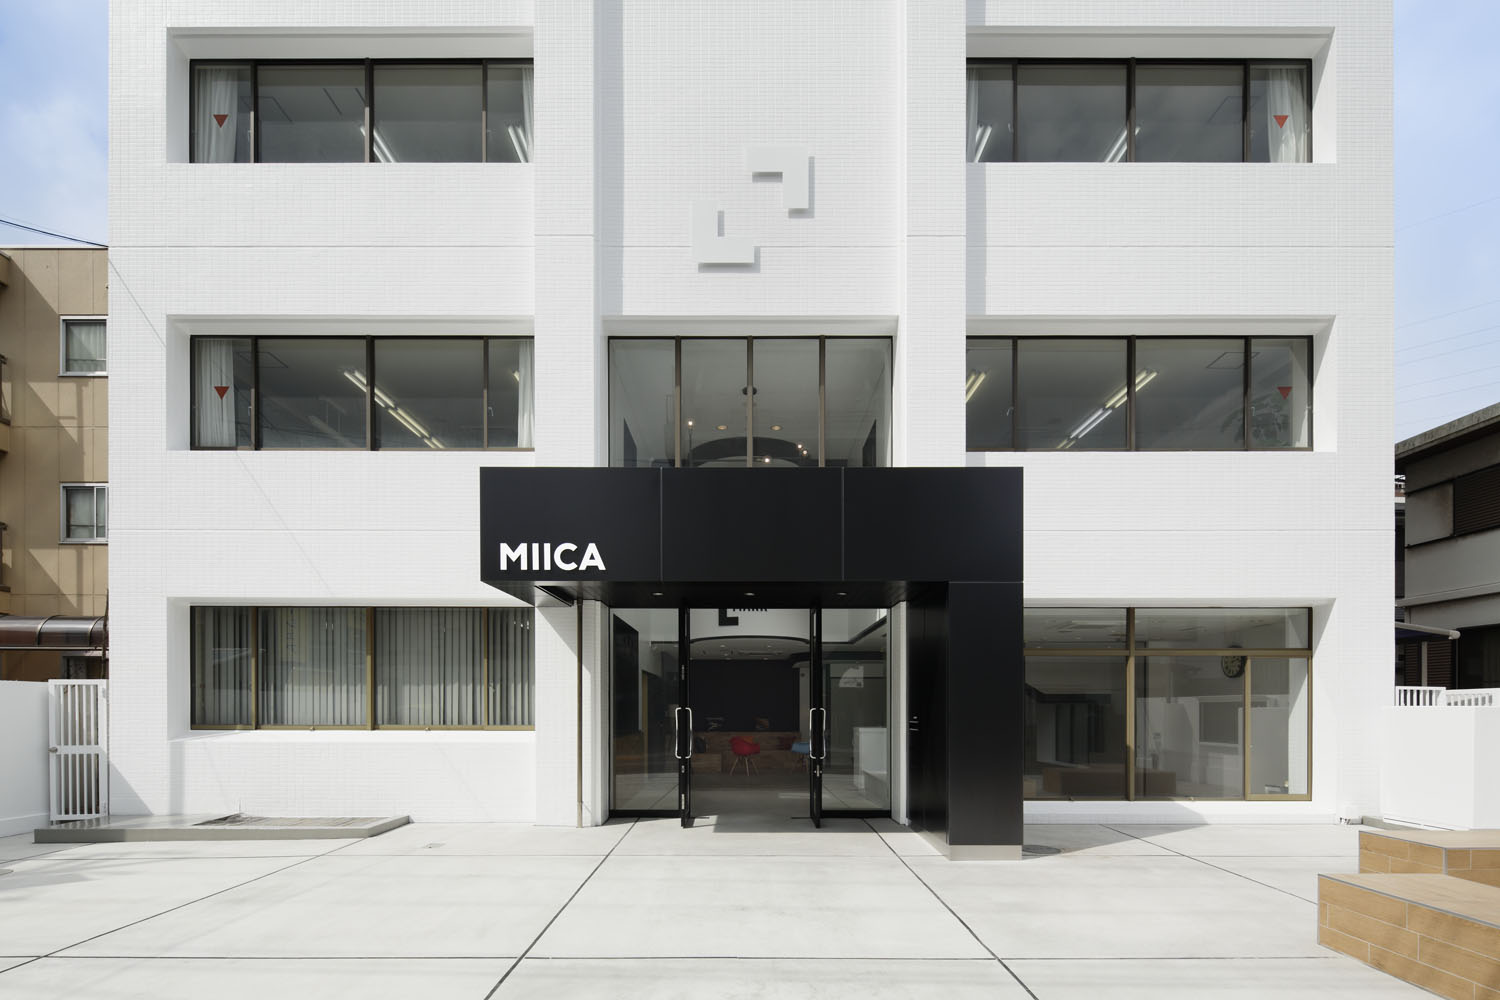 MIICA-東京表現高等学院 (2)